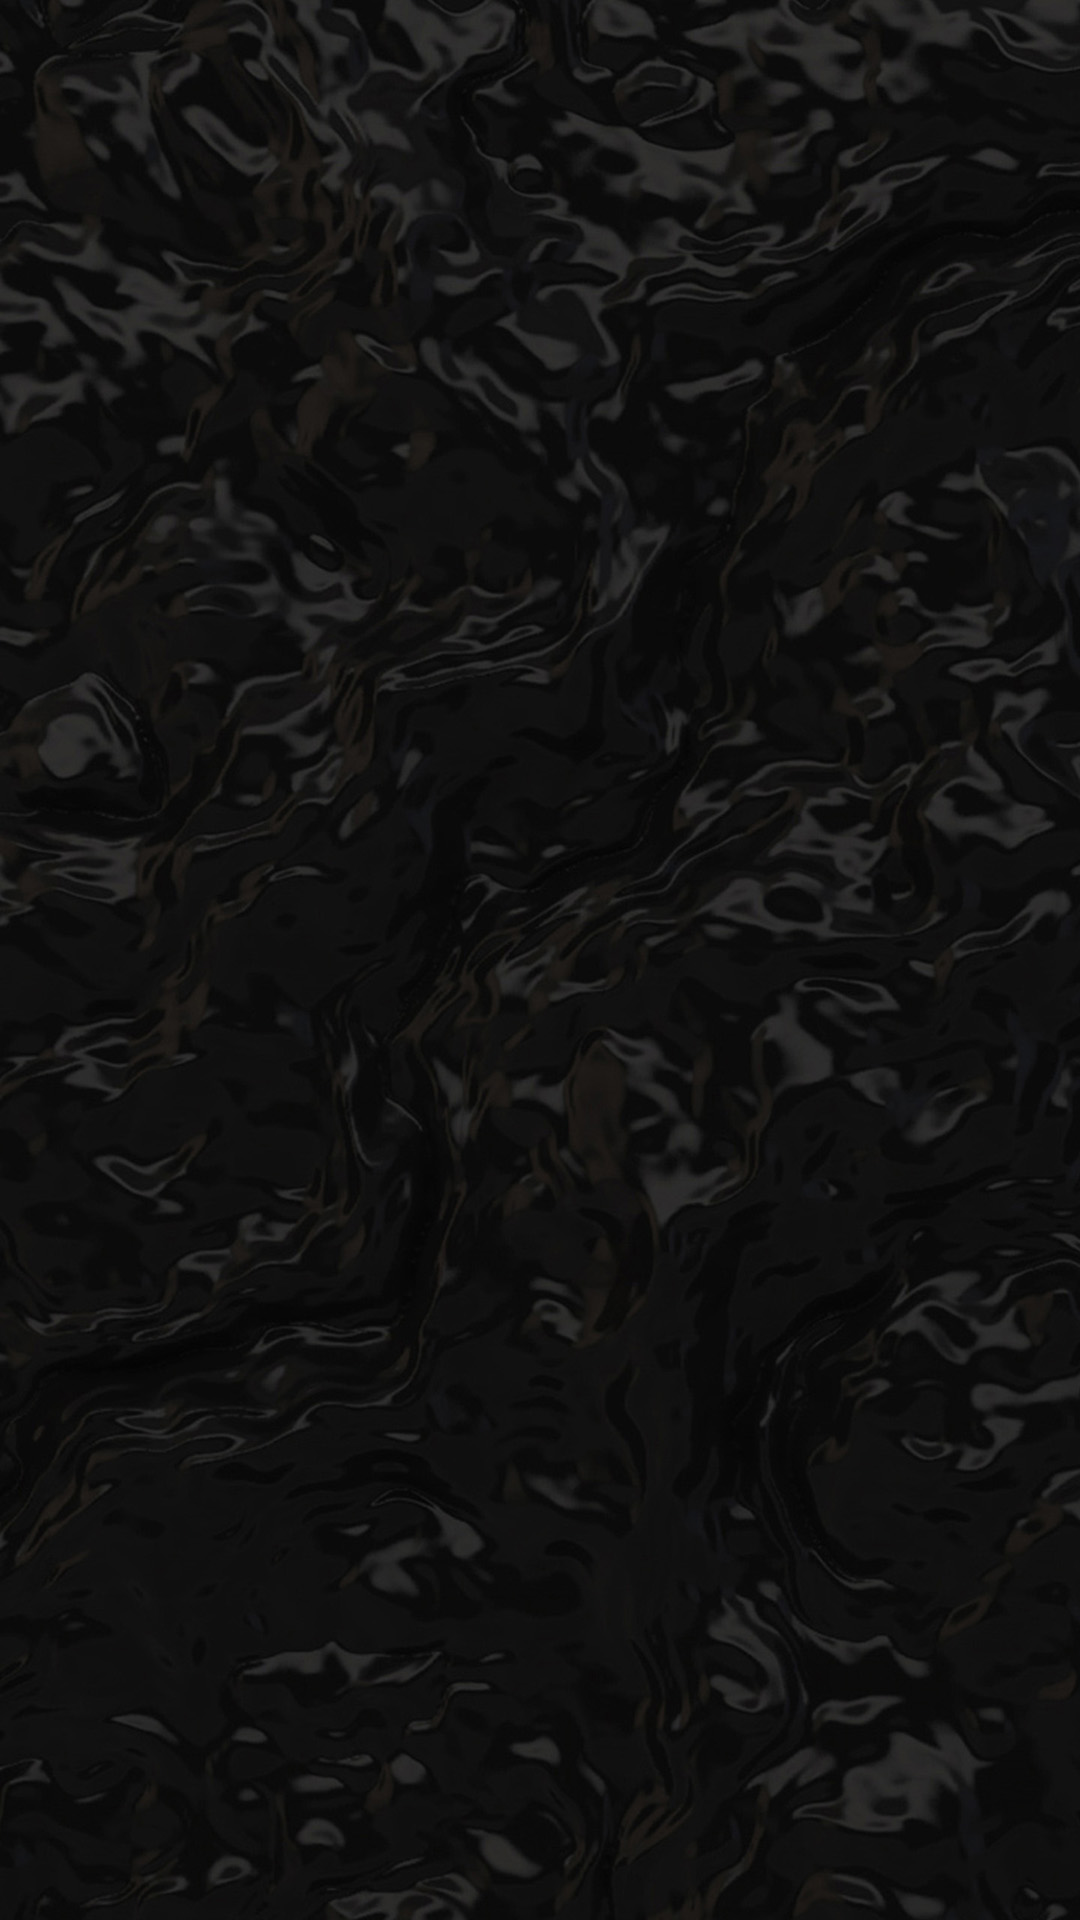 38+] Black Galaxy Wallpaper - WallpaperSafari